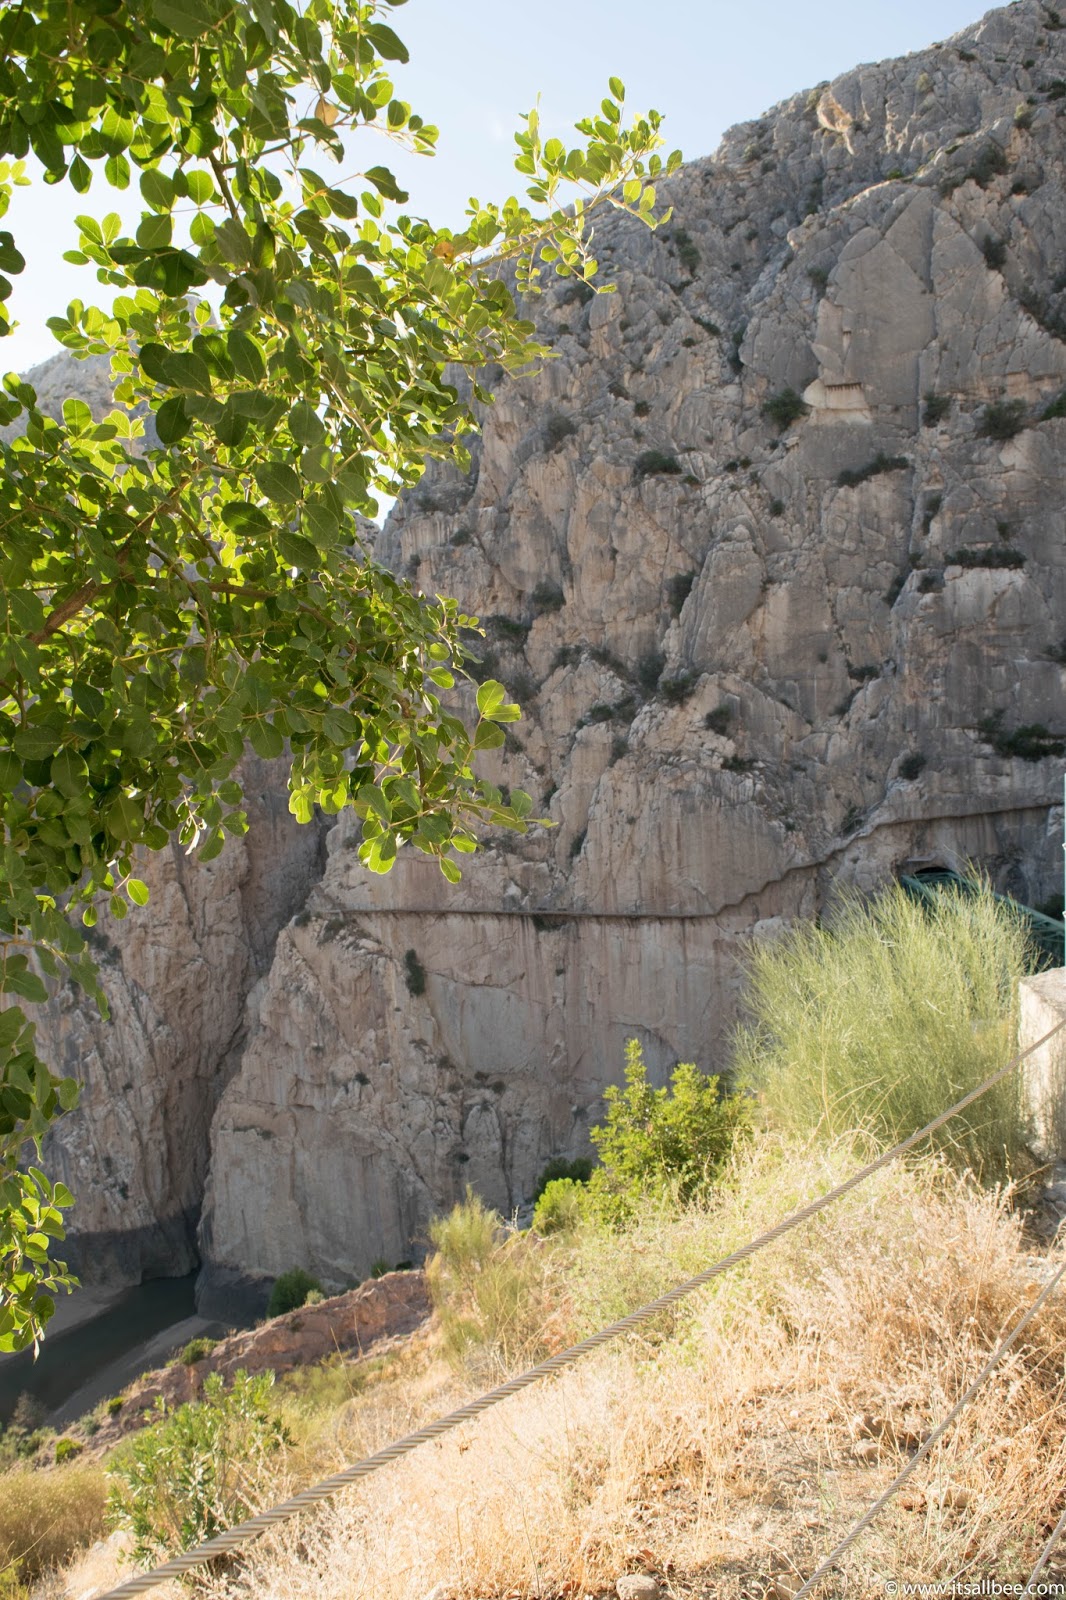 El Chorro - Poema De Roca - El Caminito Del Rey | Hiking Spain's Most Dangerous Hiking Trail